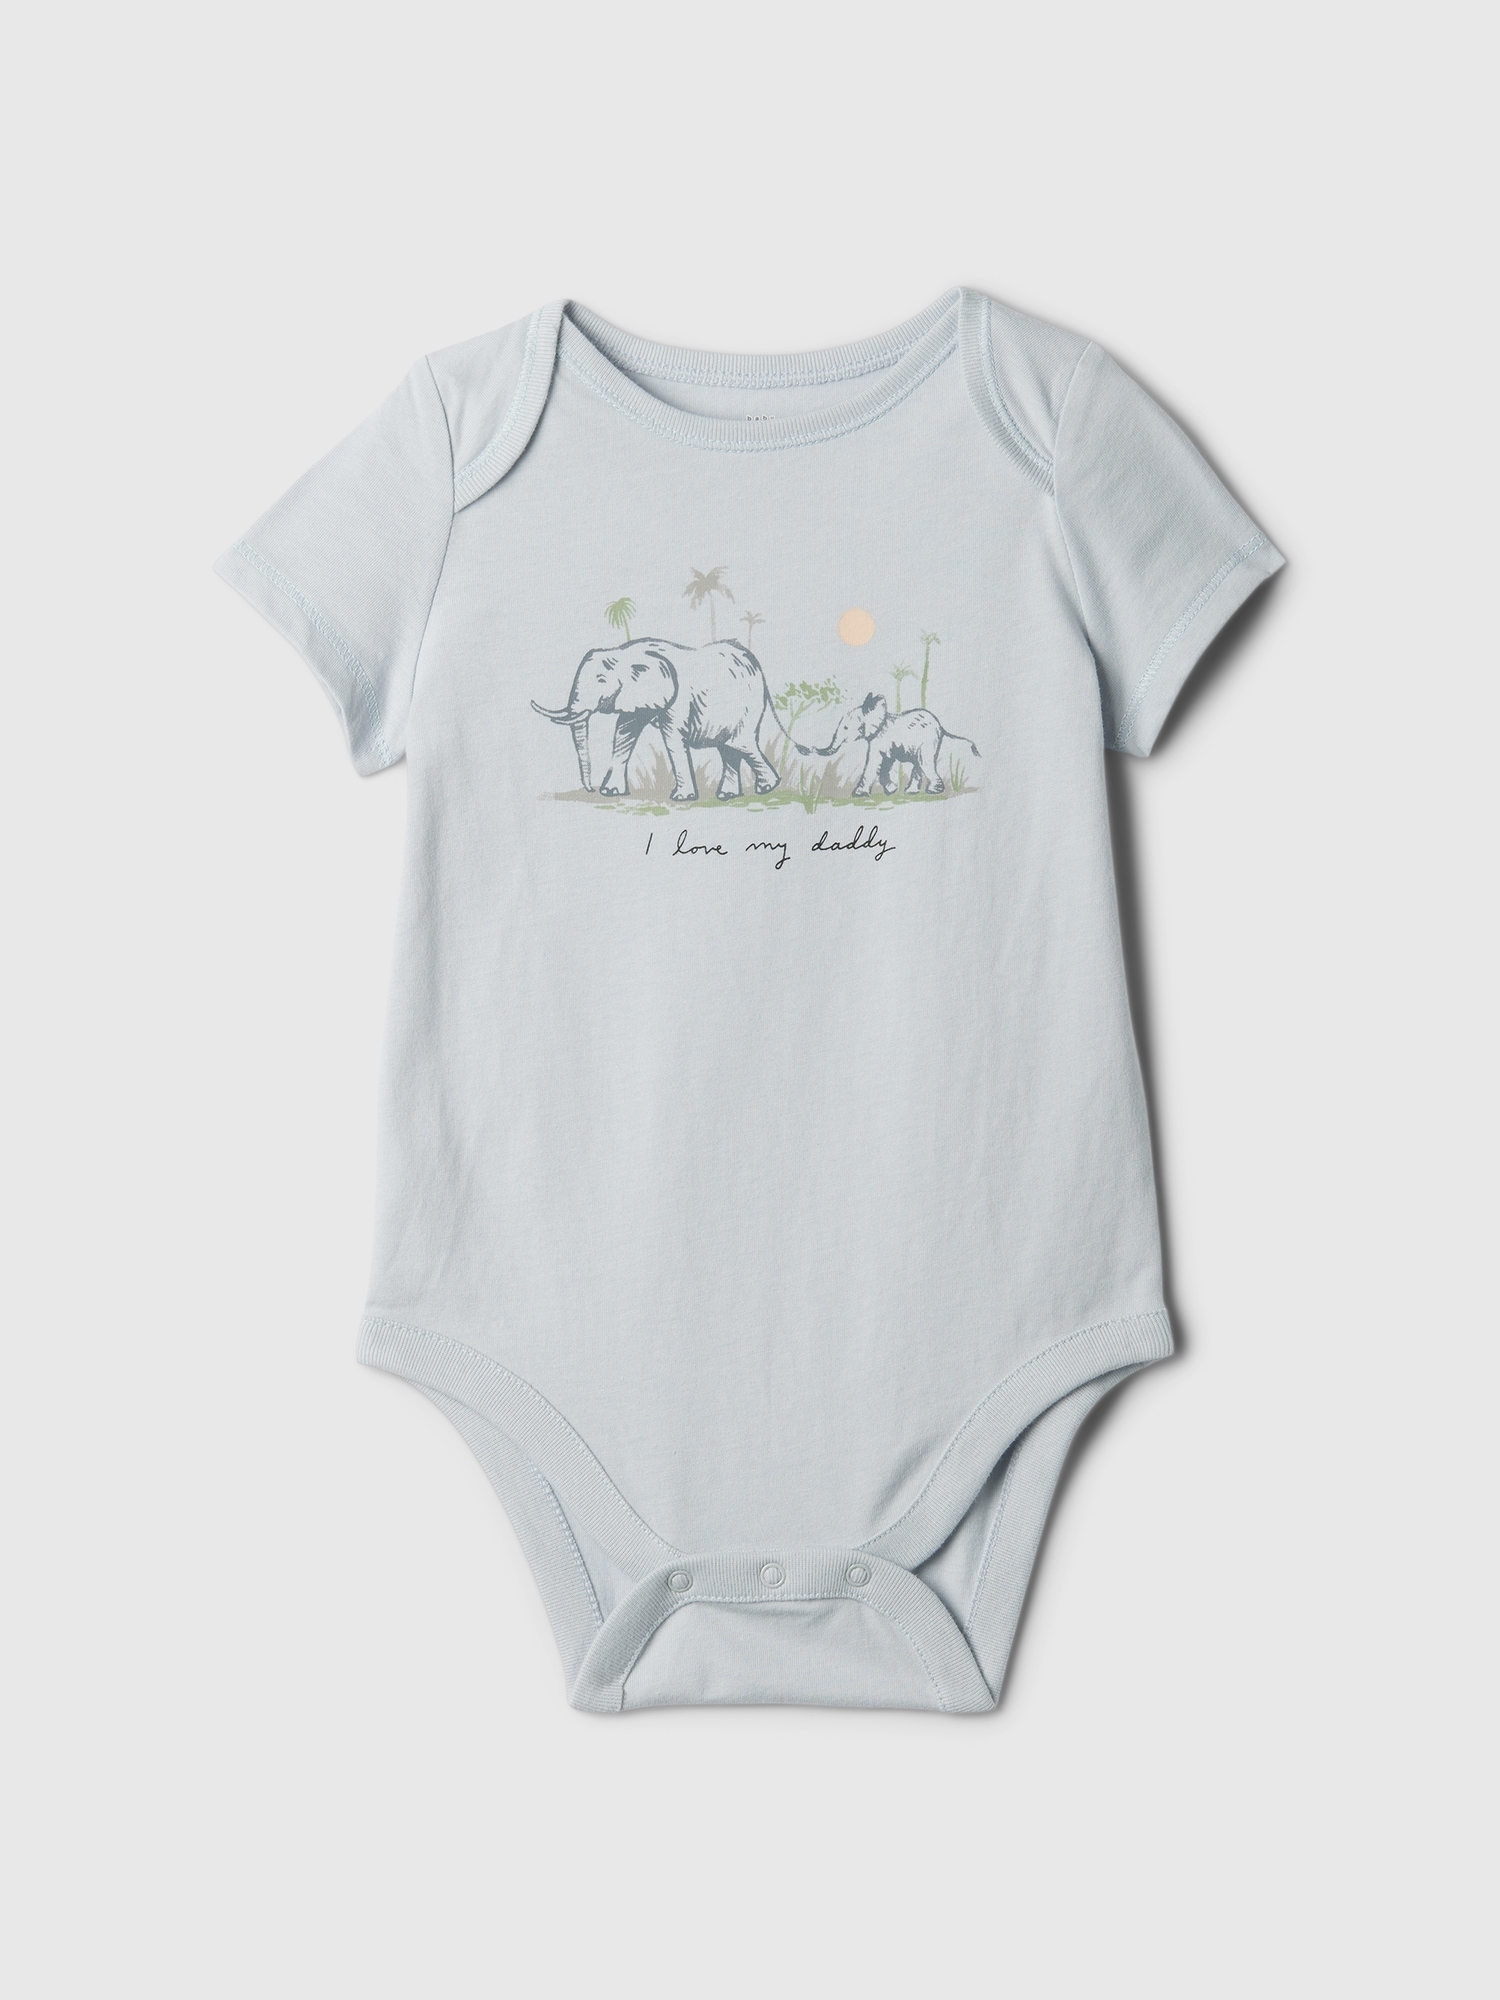 Baby First Favorites Organic Cotton Graphic Bodysuit